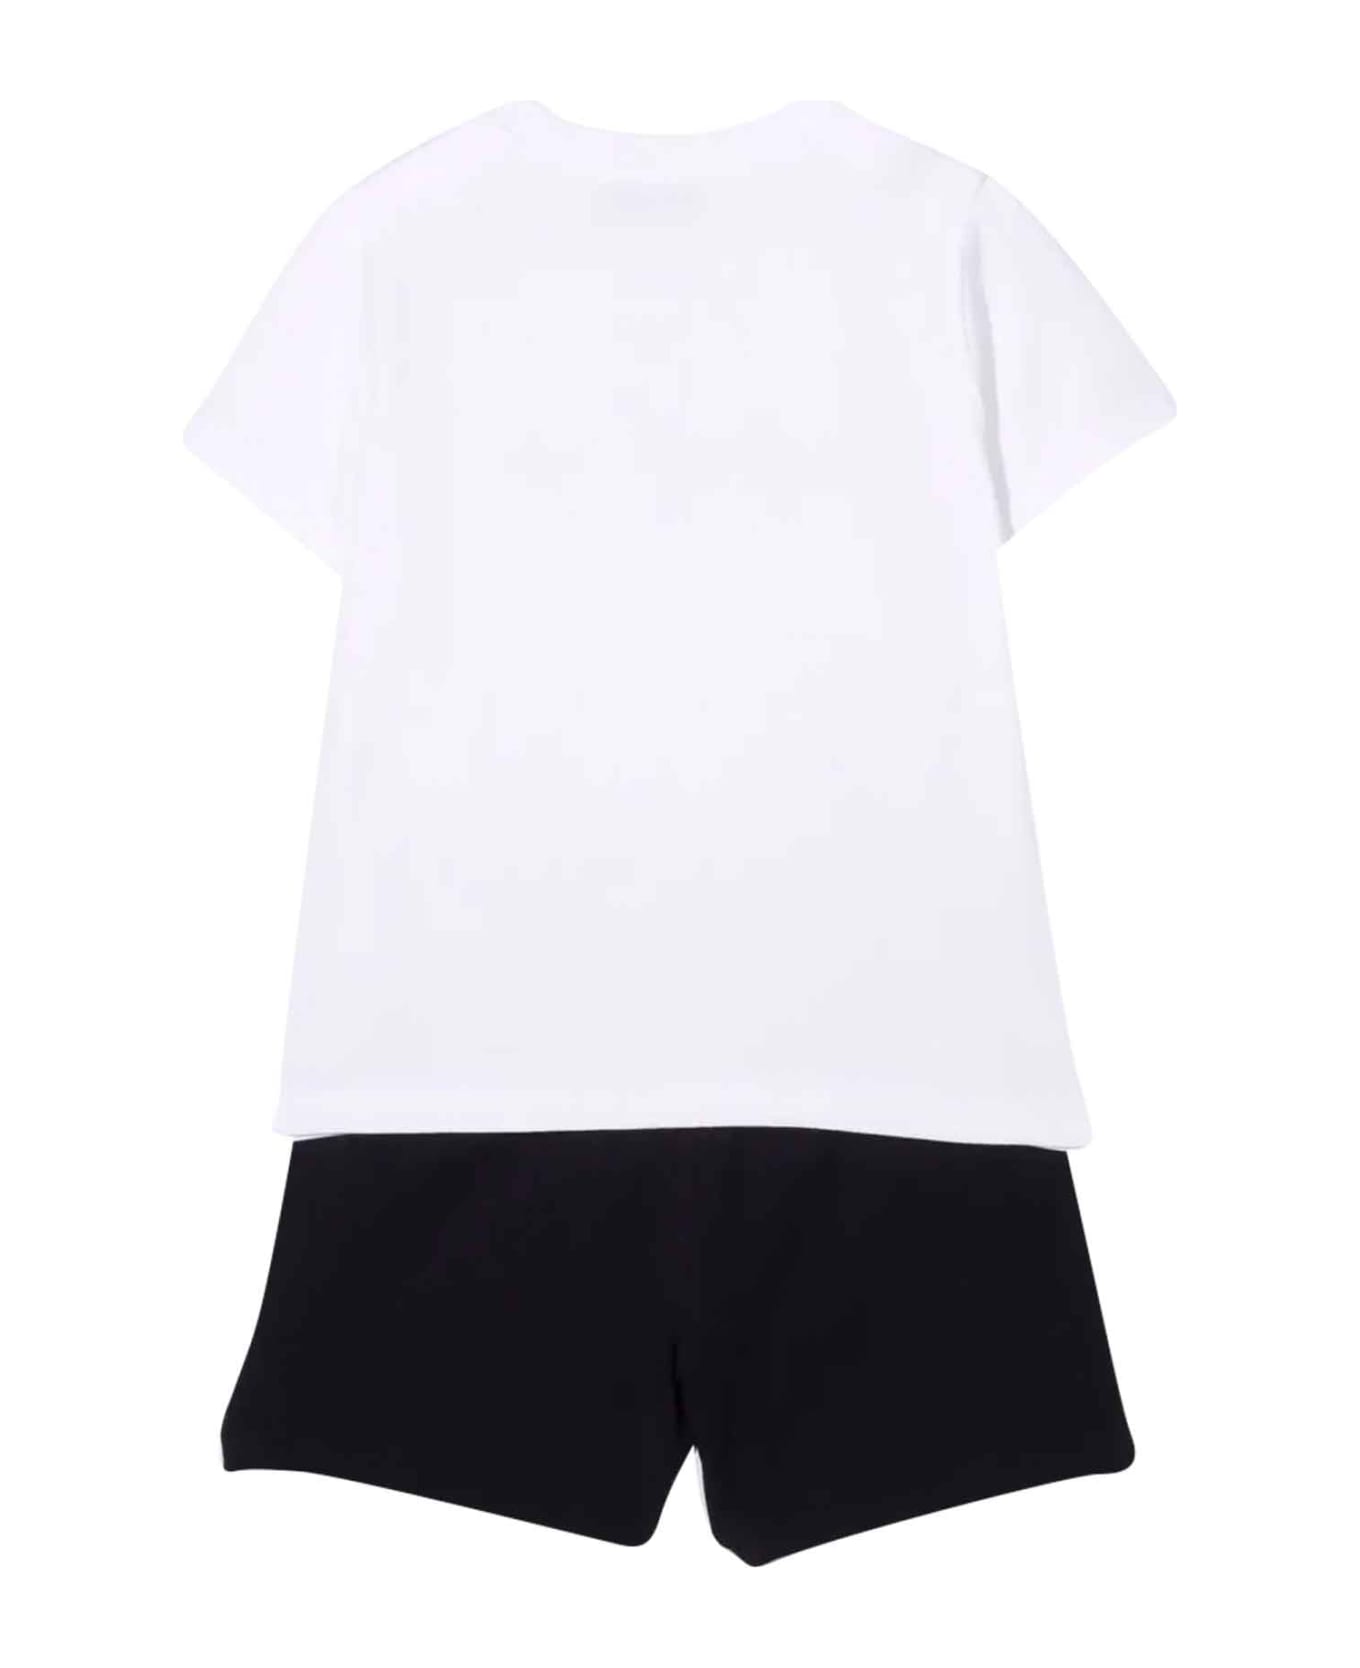 Moncler Unisex Baby Sports Suit - Bianco